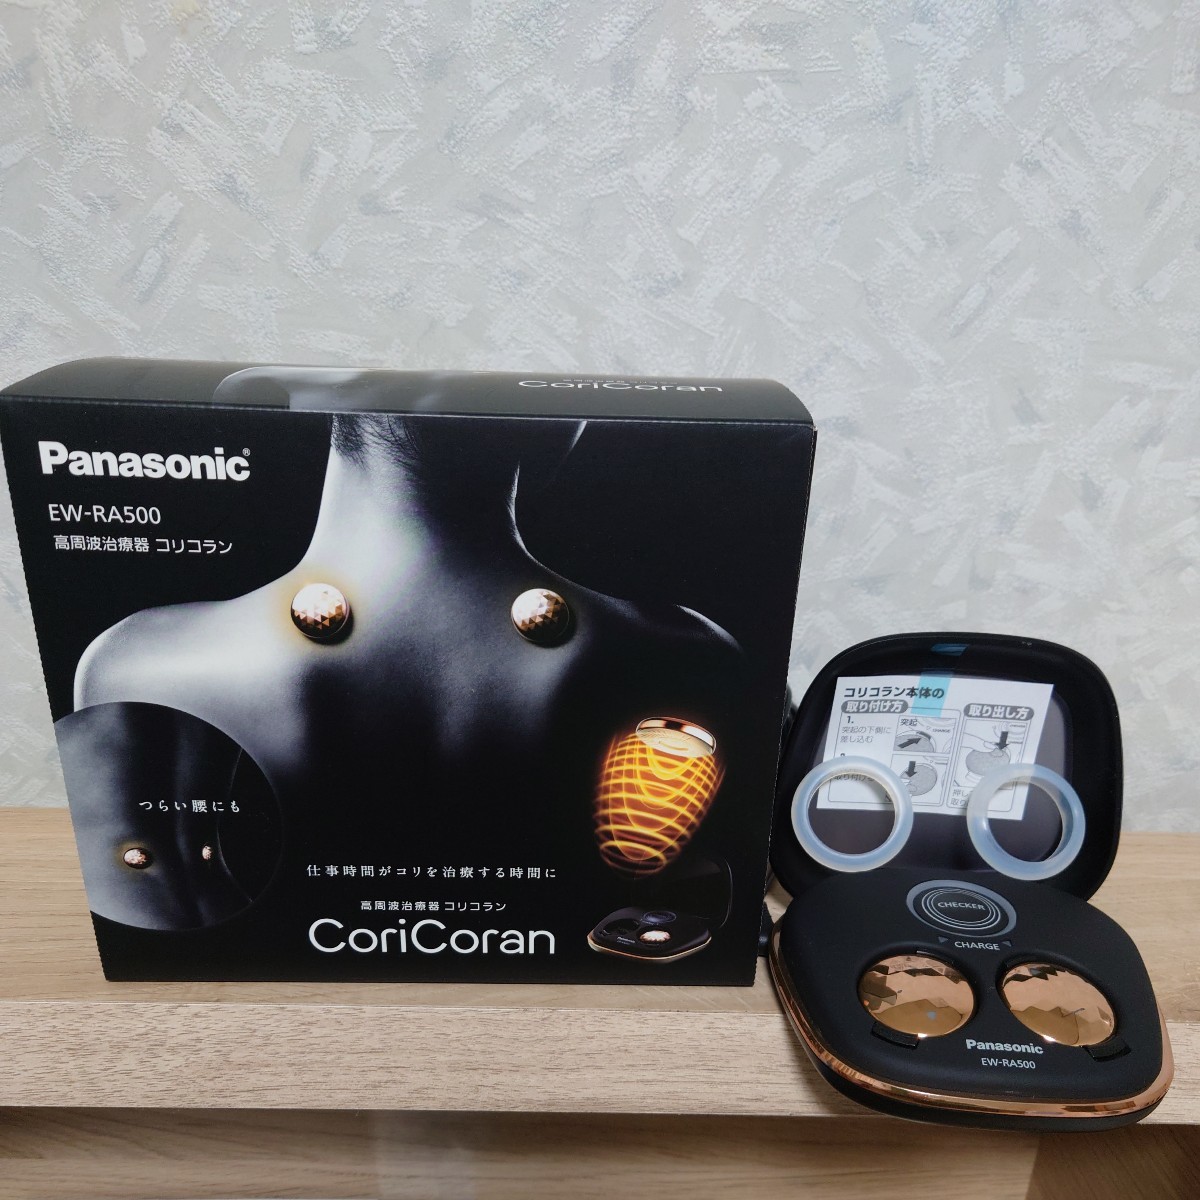 Panasonic パナソニック CoriCoran 高周波治療器 コリコラン EW-RA500